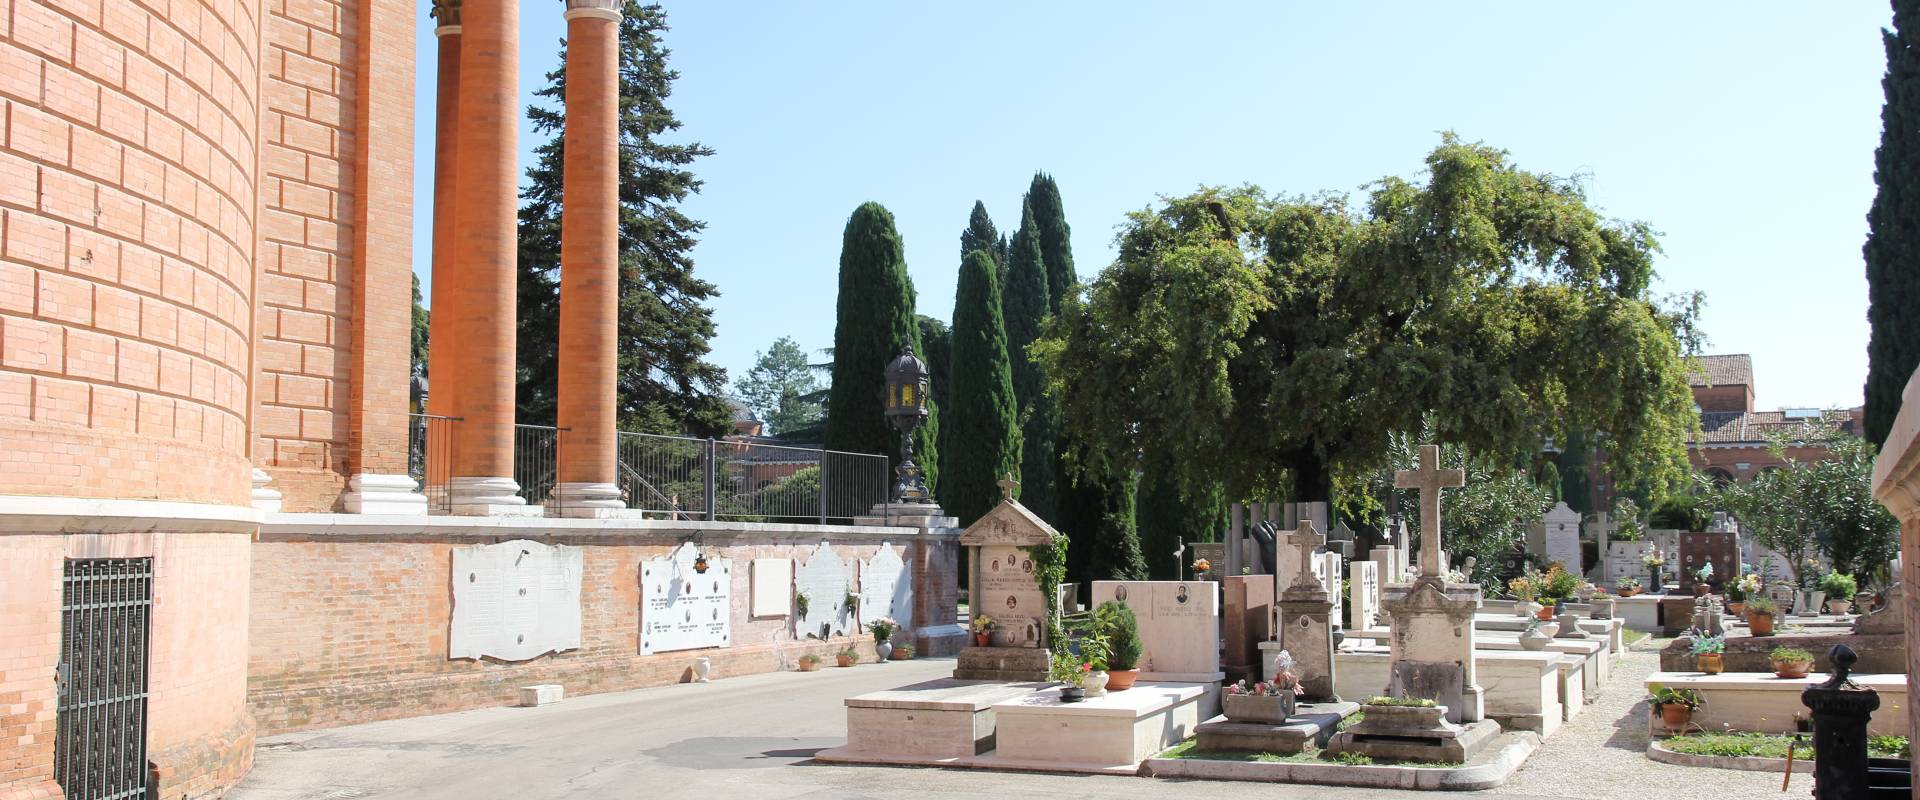 Forlì, cimitero monumentale (10) photo by Gianni Careddu